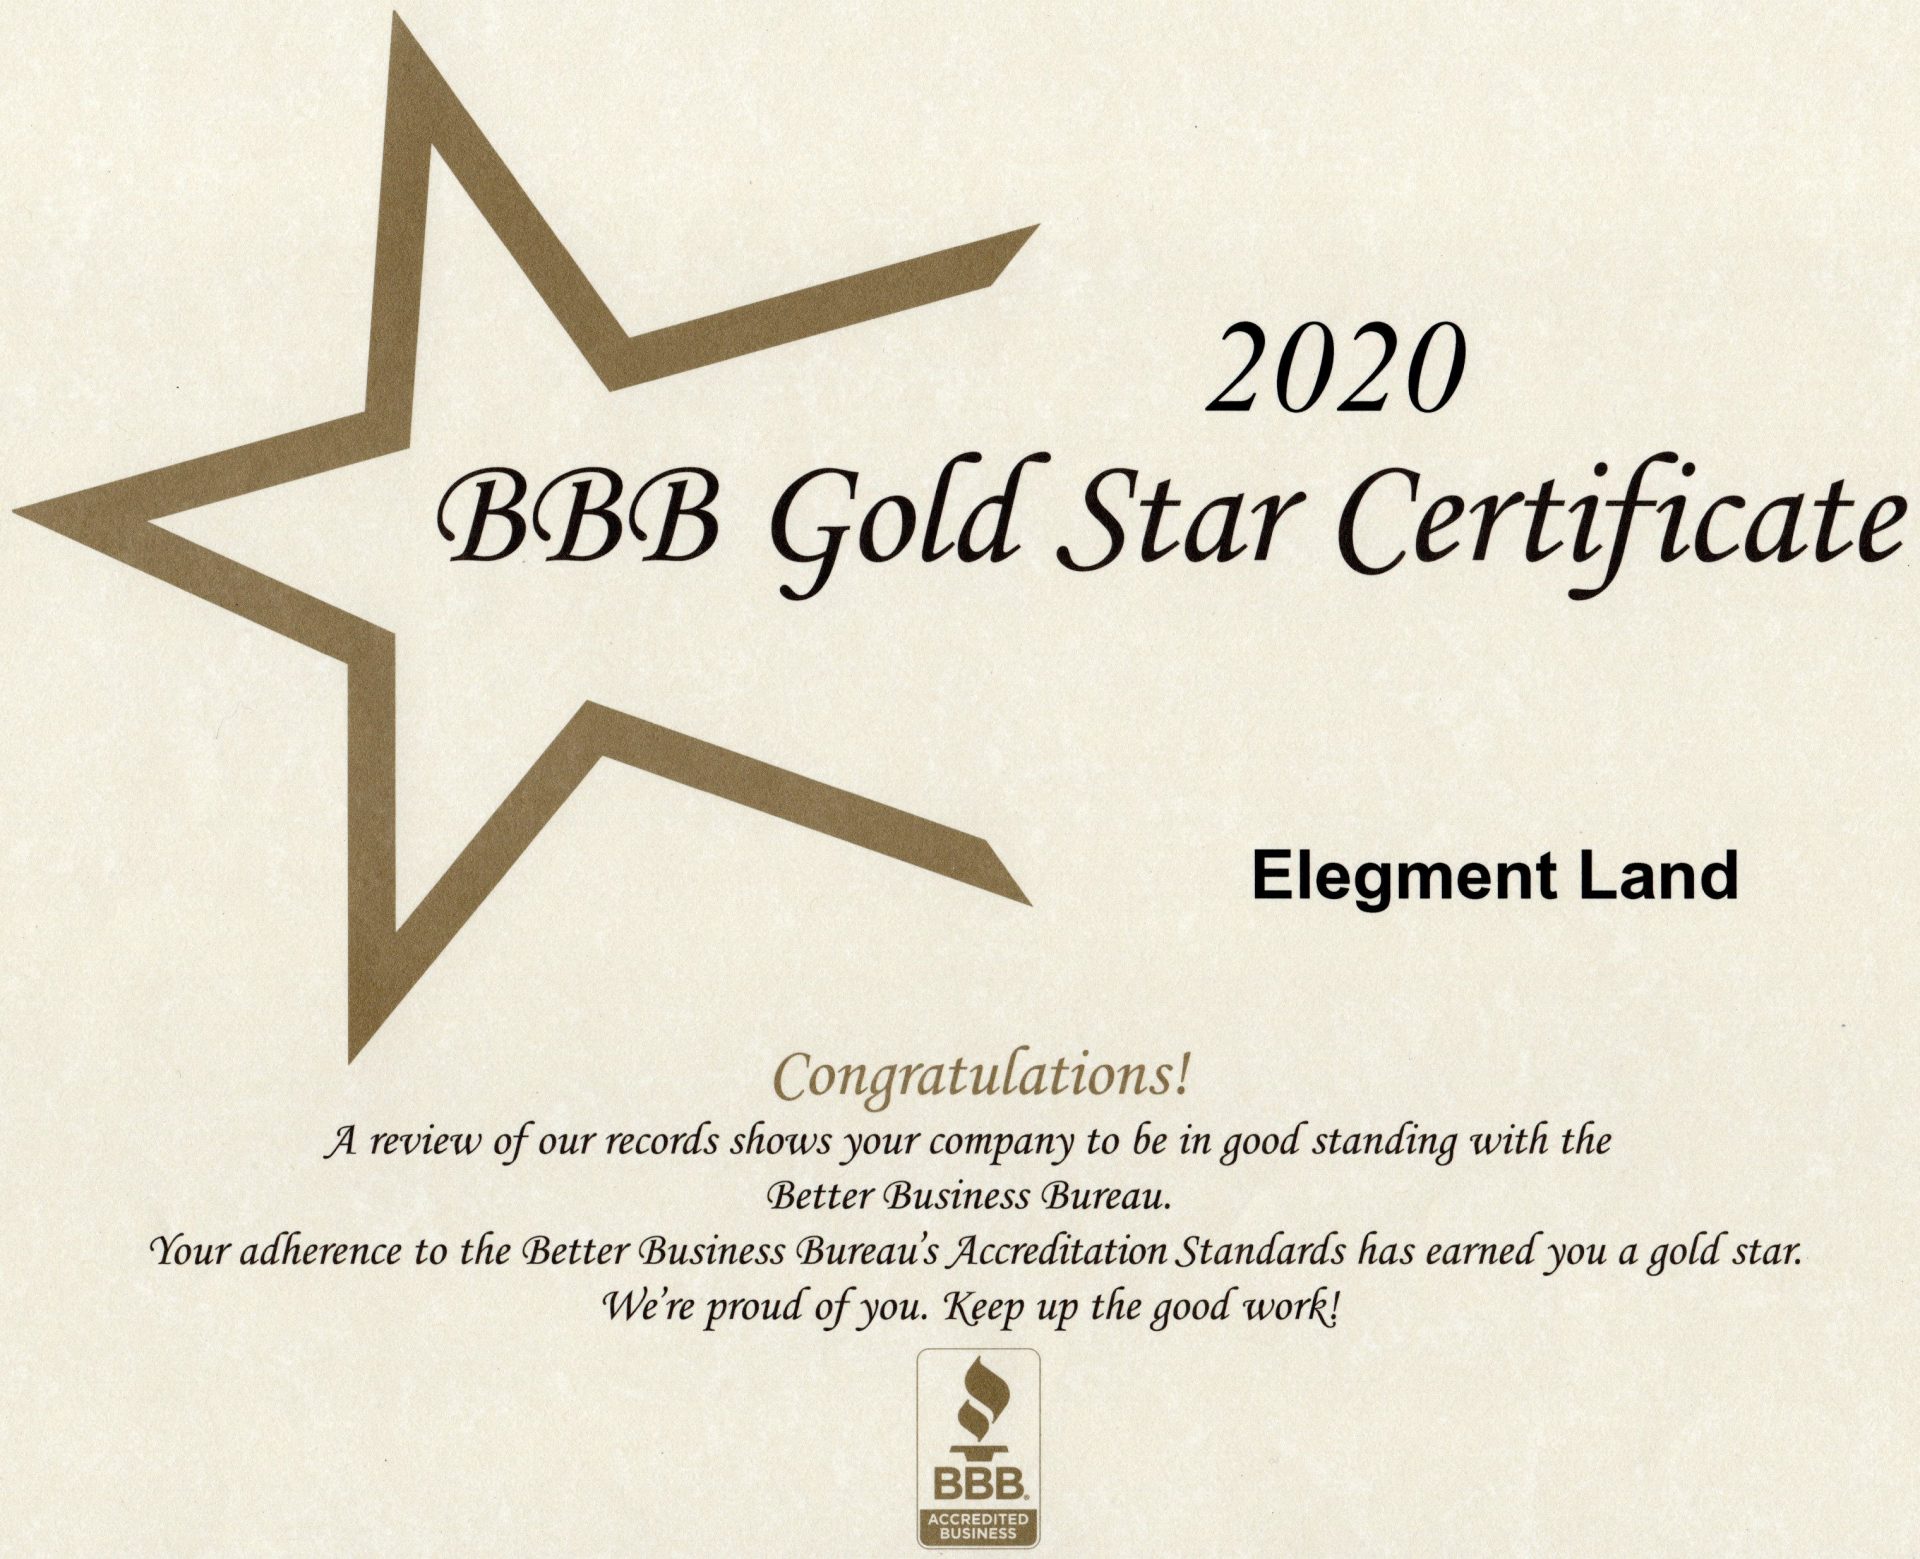 BBB Gold Star Certificate